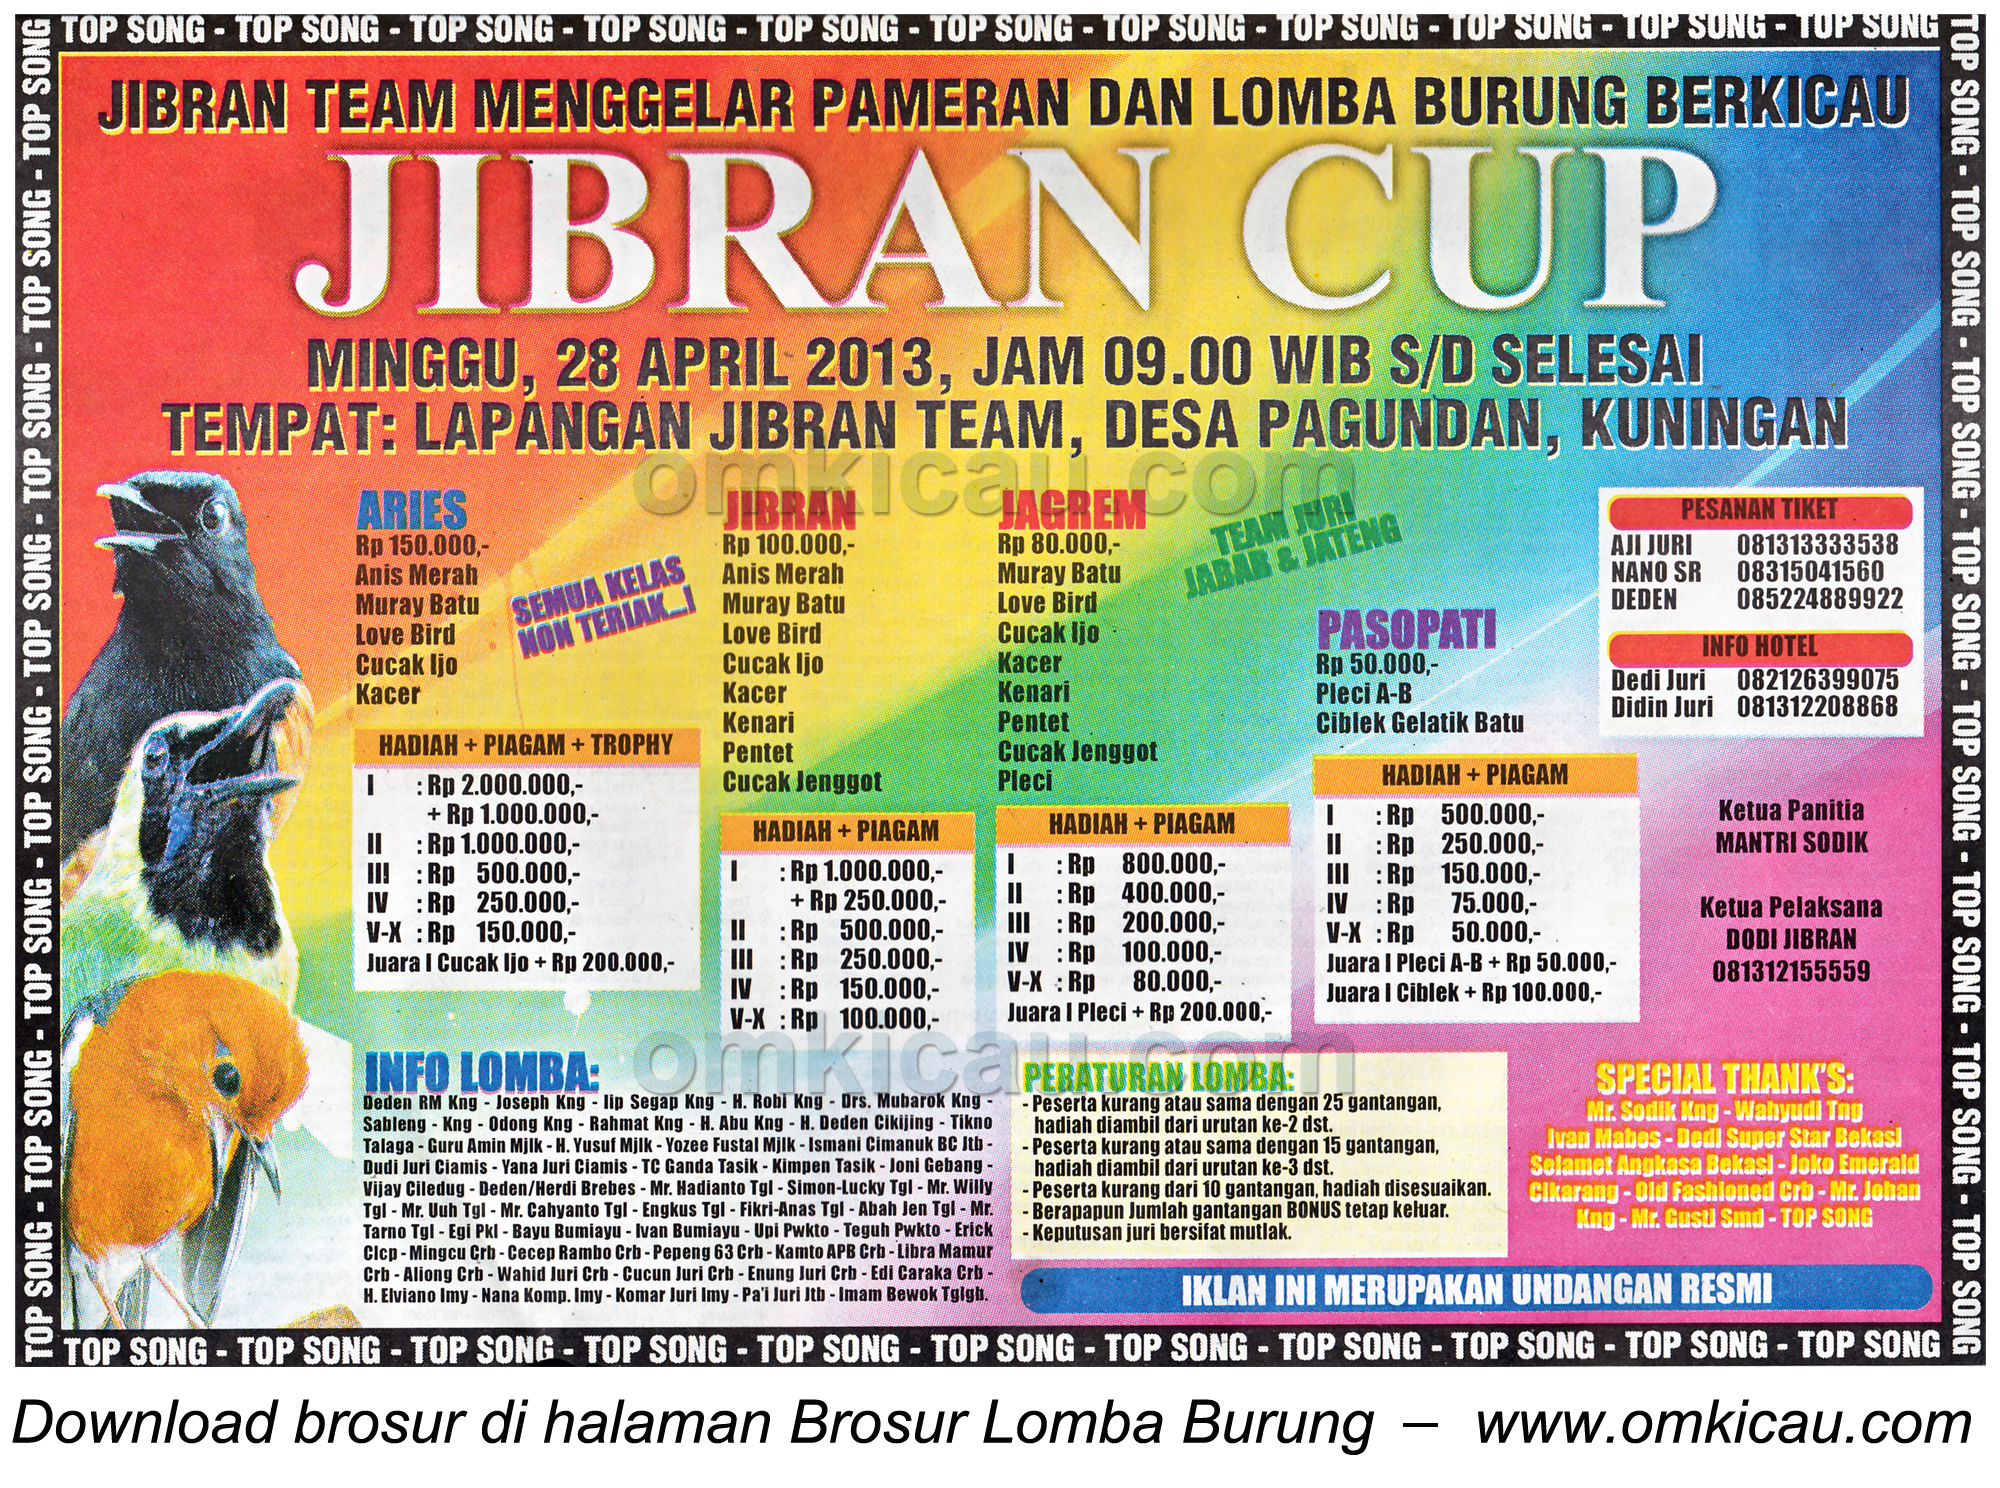 Brosur Lomba Burung Jibran Cup - Kuningan - 28 April 2013